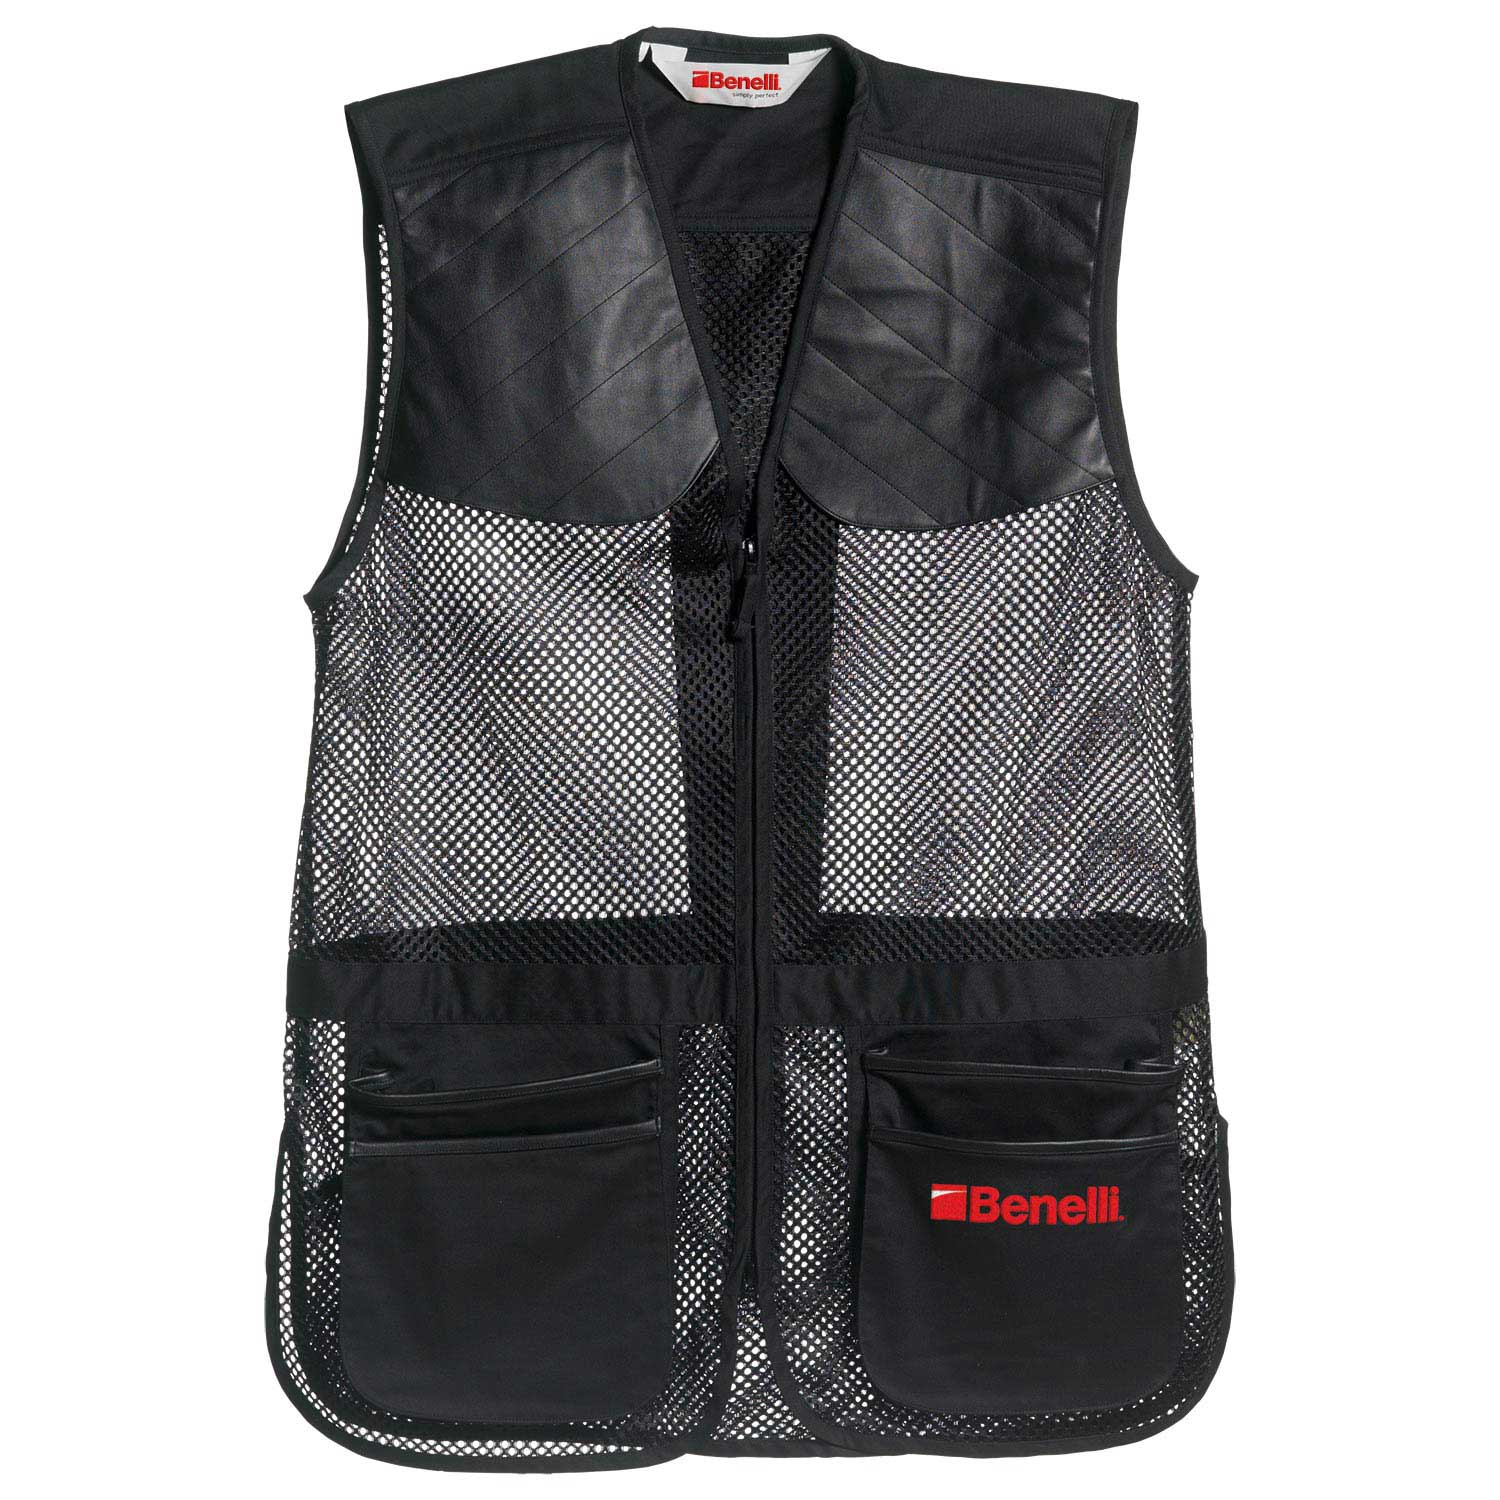 Benelli shooting vests non deposit forex bonus 2015 penjawat